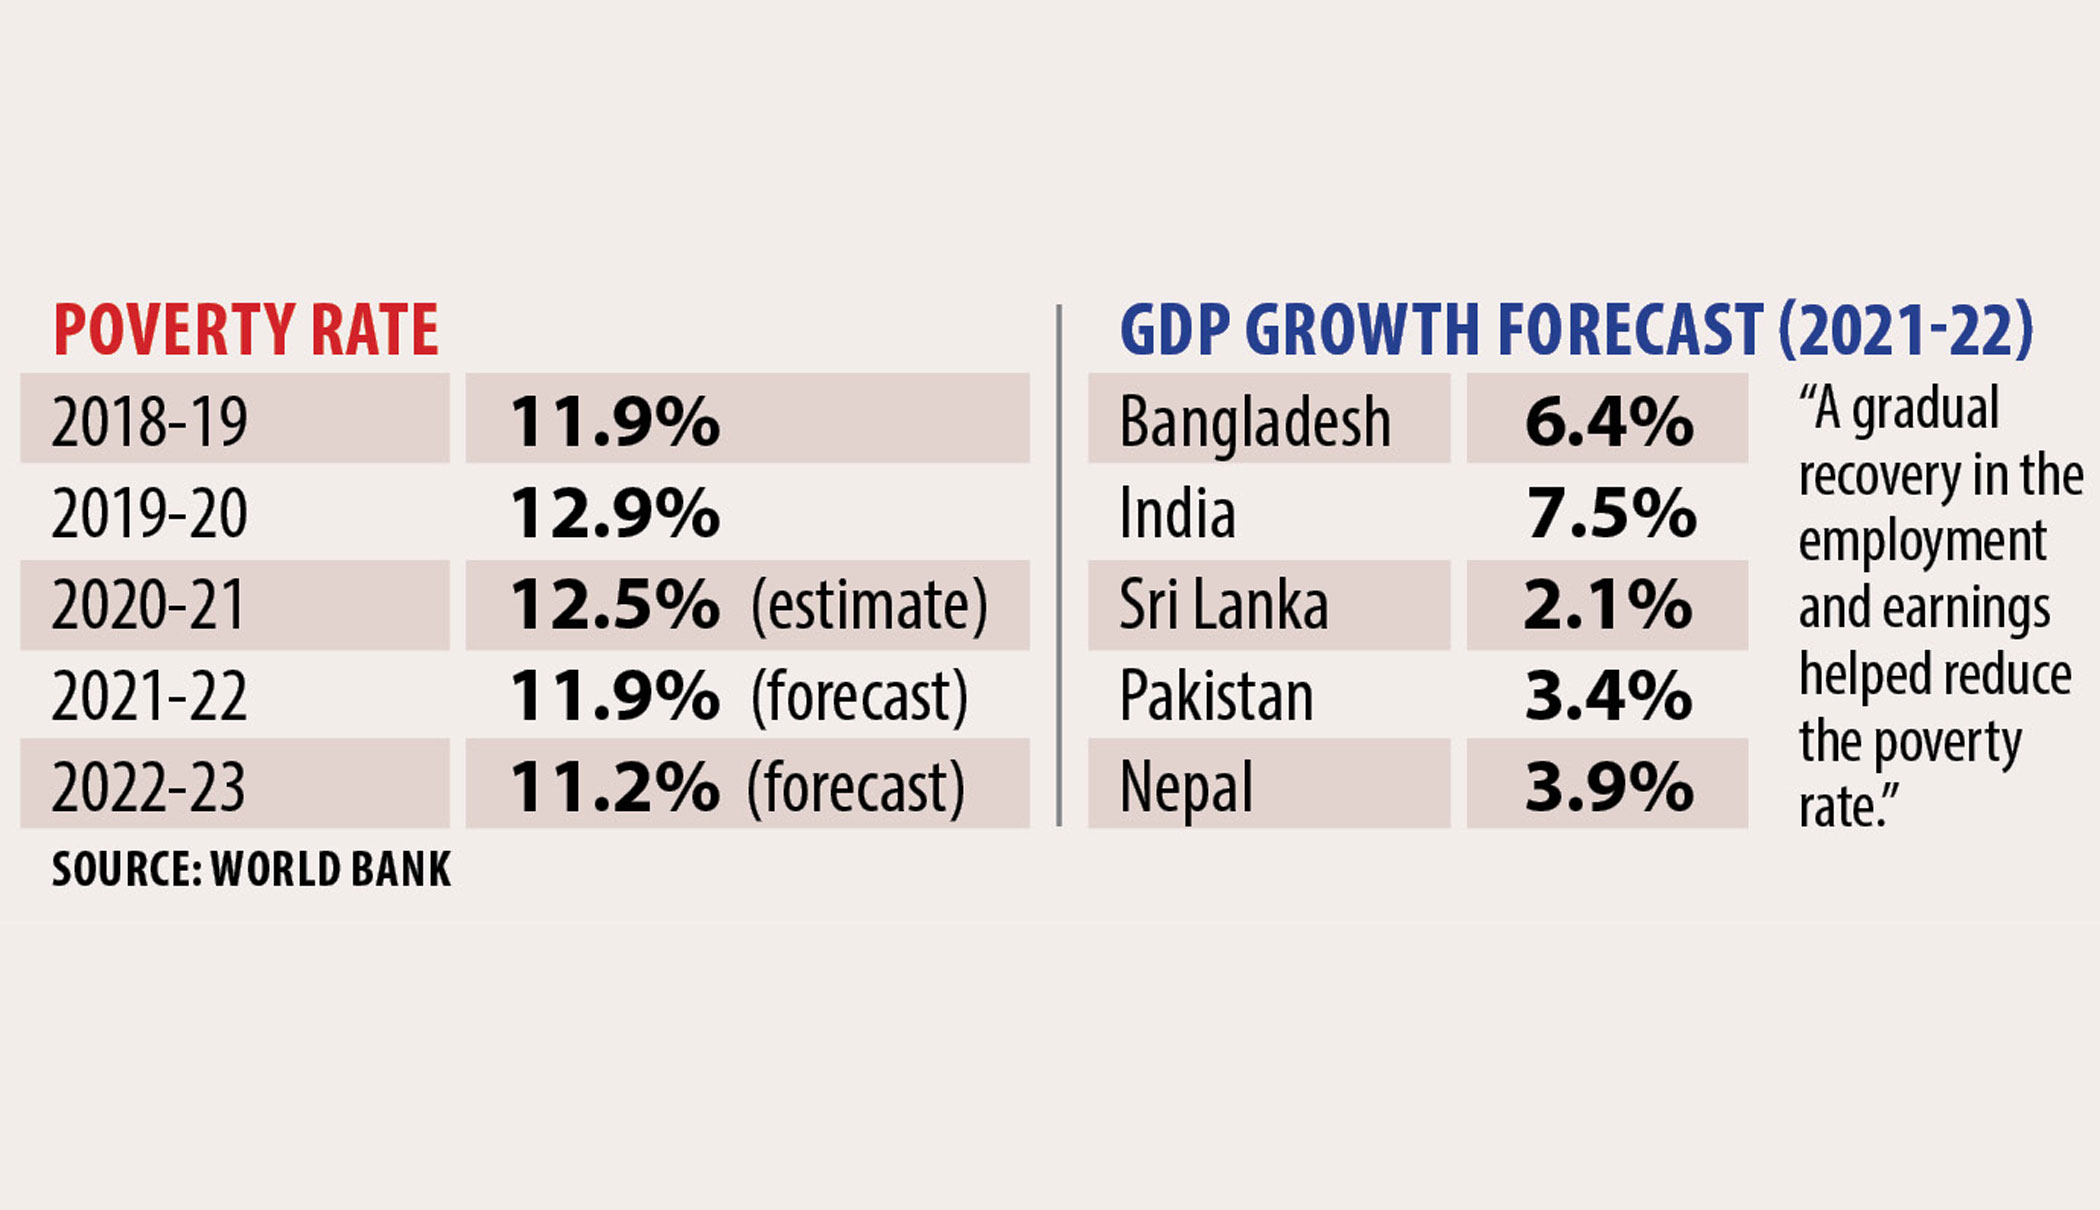 Bangladesh's poverty rate